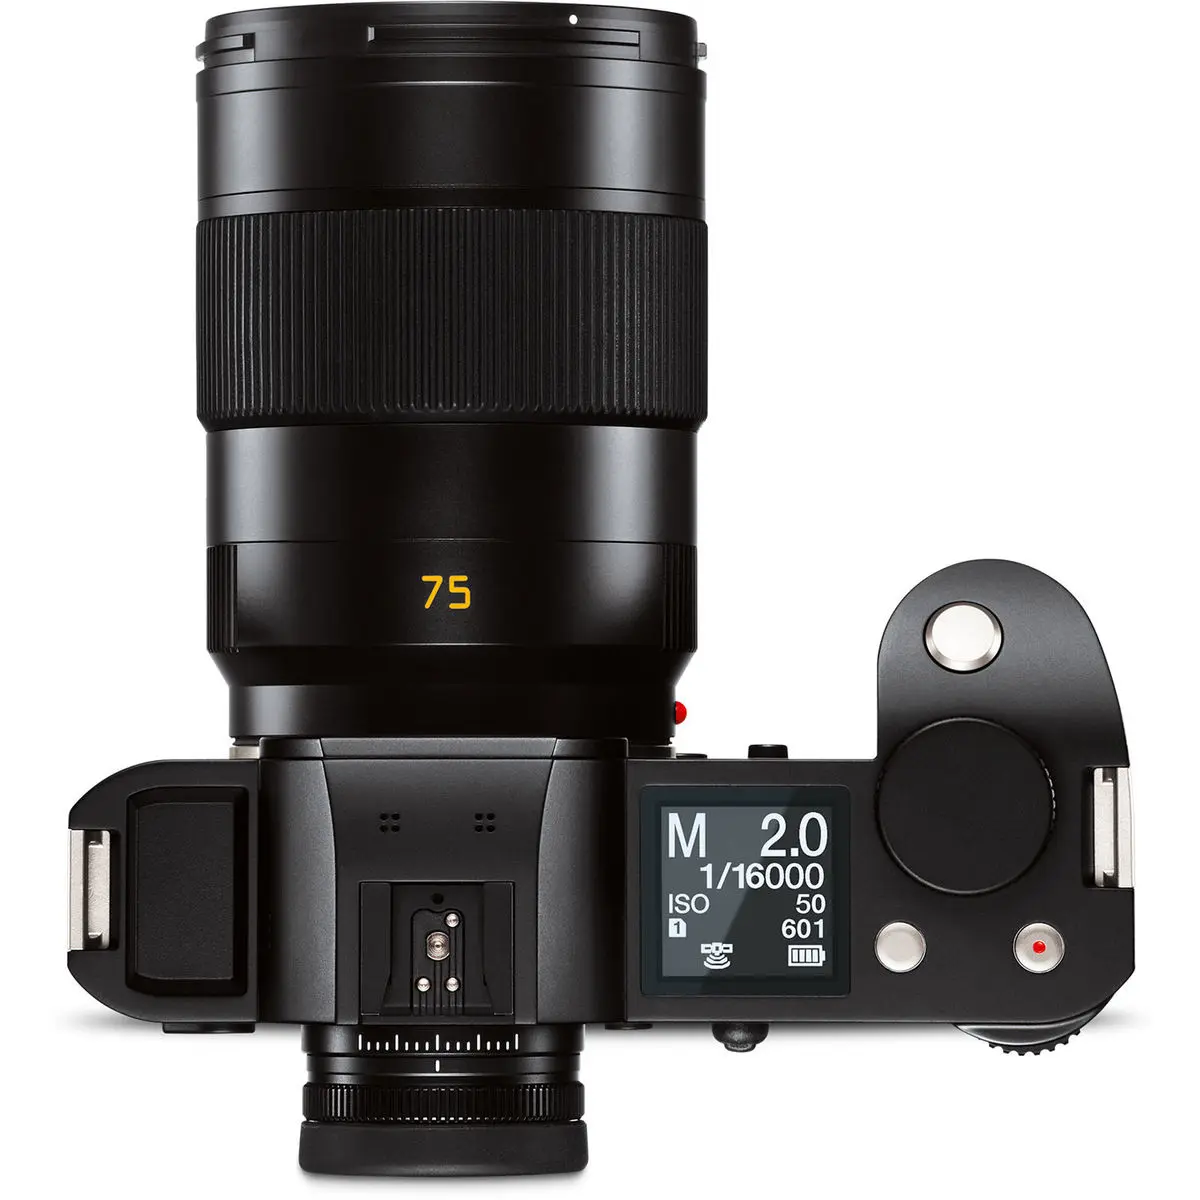 6. Leica APO-Summicron-SL 75mm F2 (11178) Lens